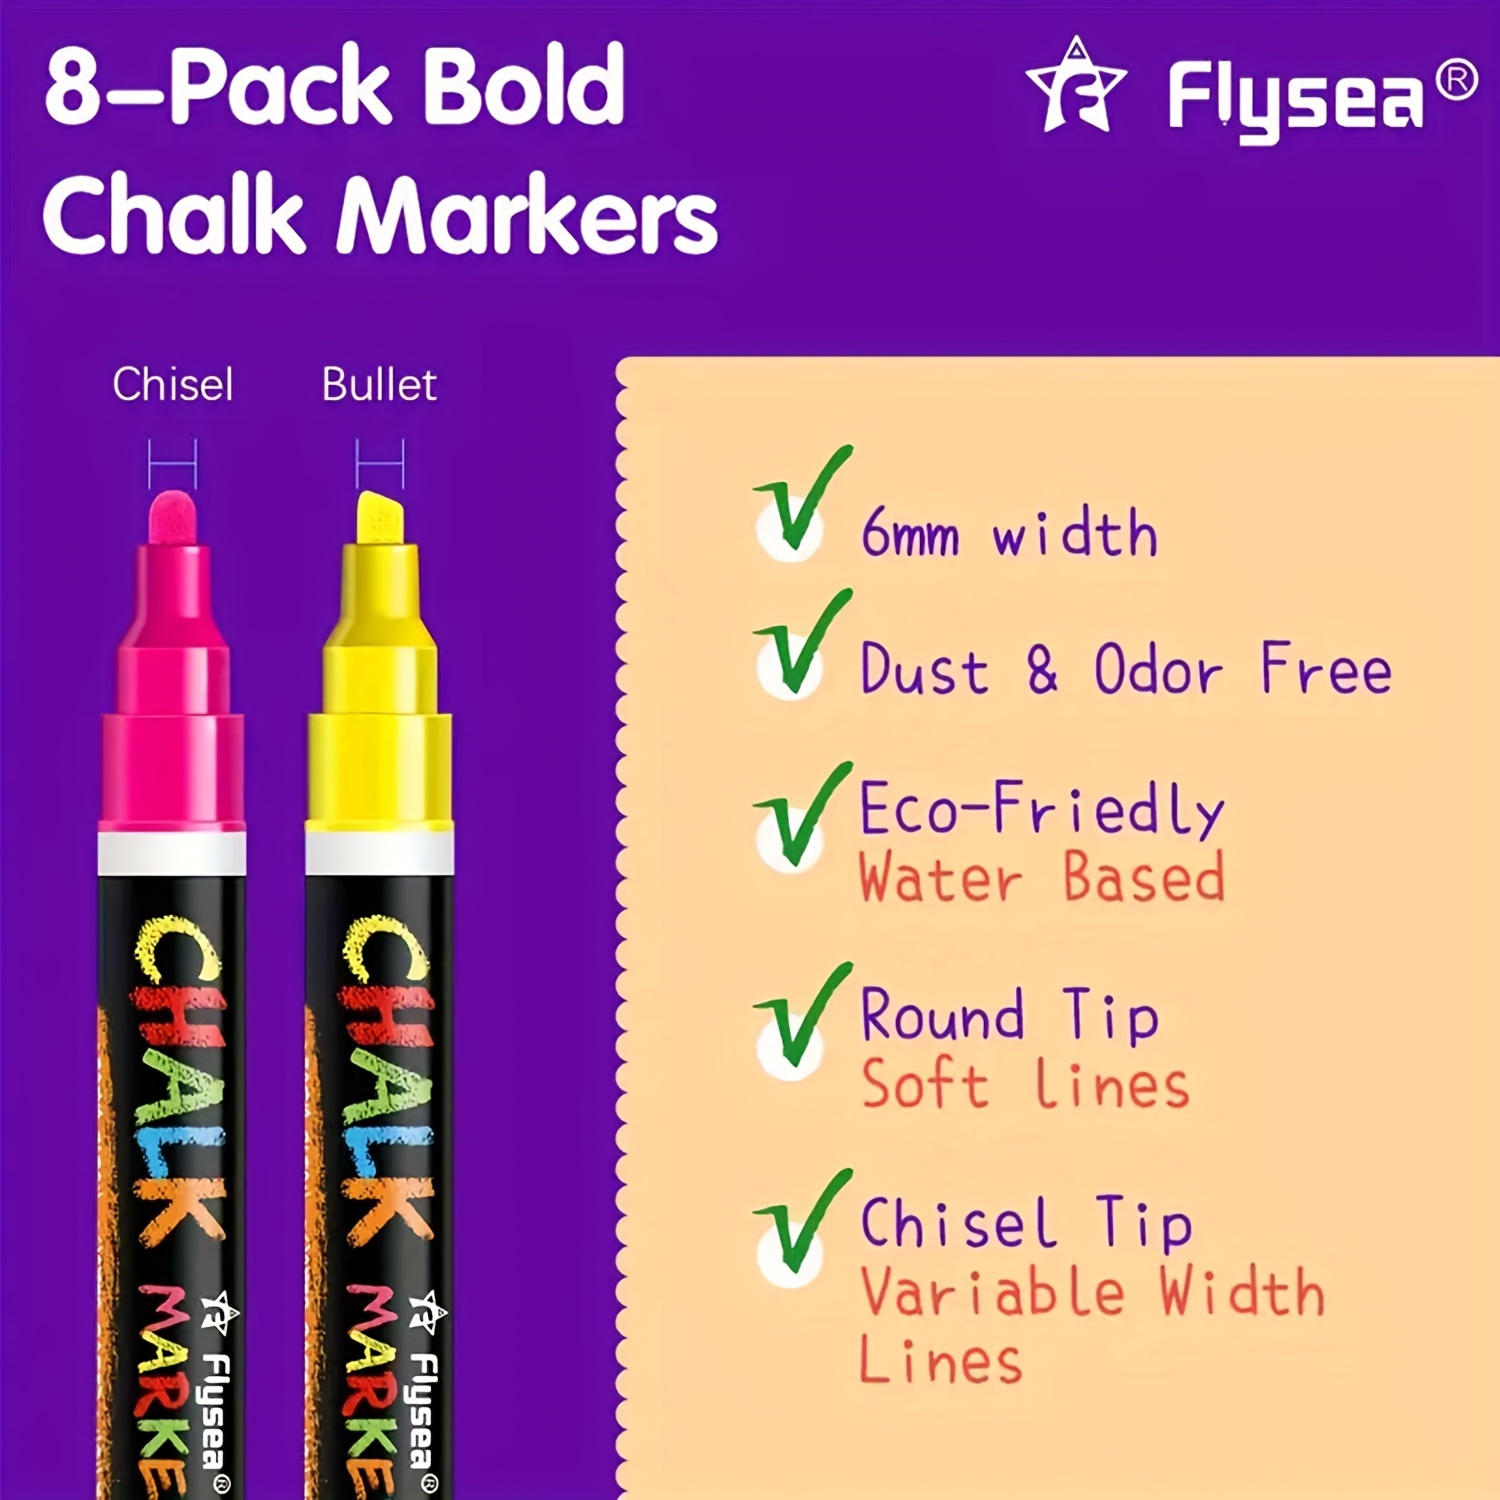 Pack 4 marcadores fluorescentes Eco